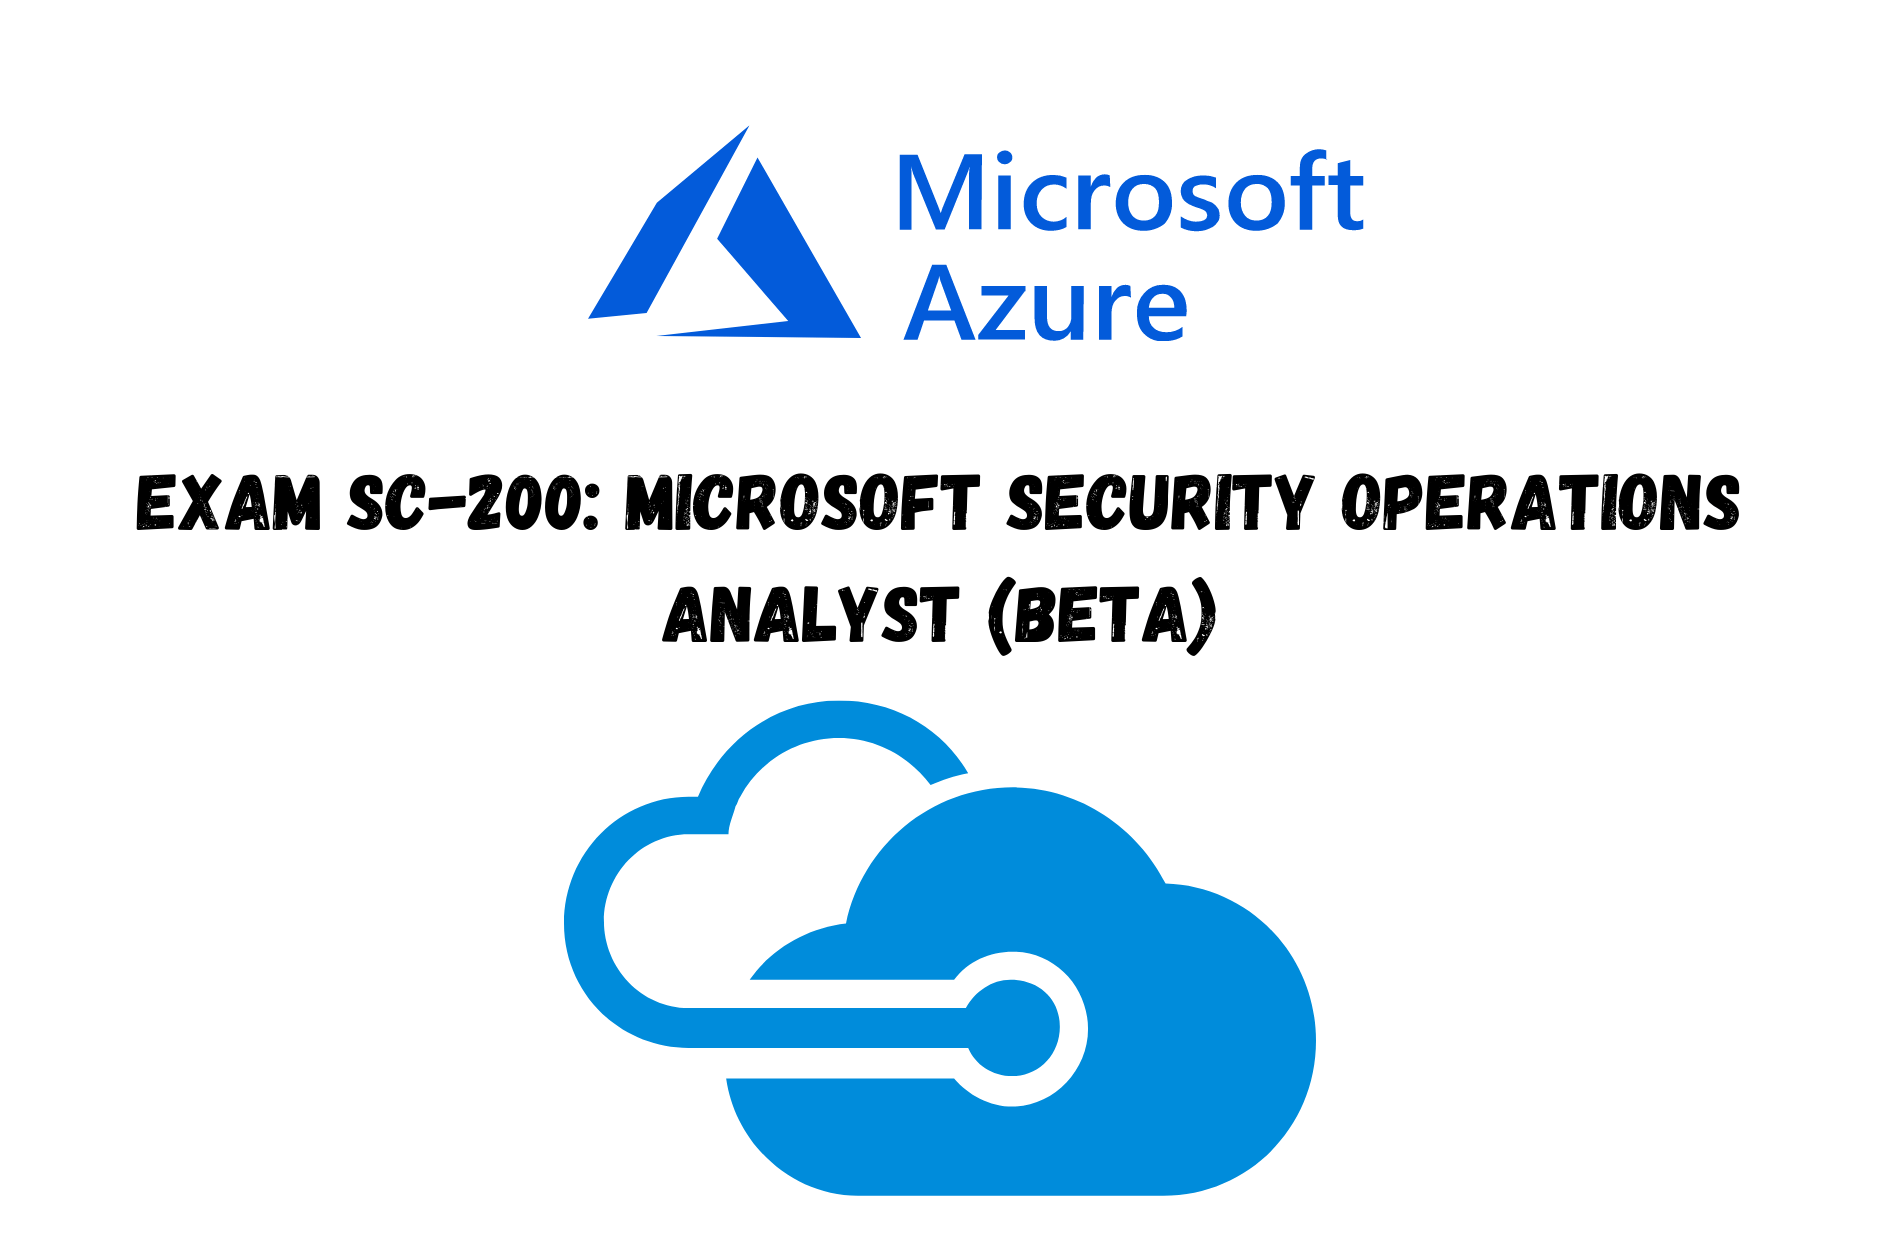 Exam SC-200: Microsoft Security Operations Analyst (beta)